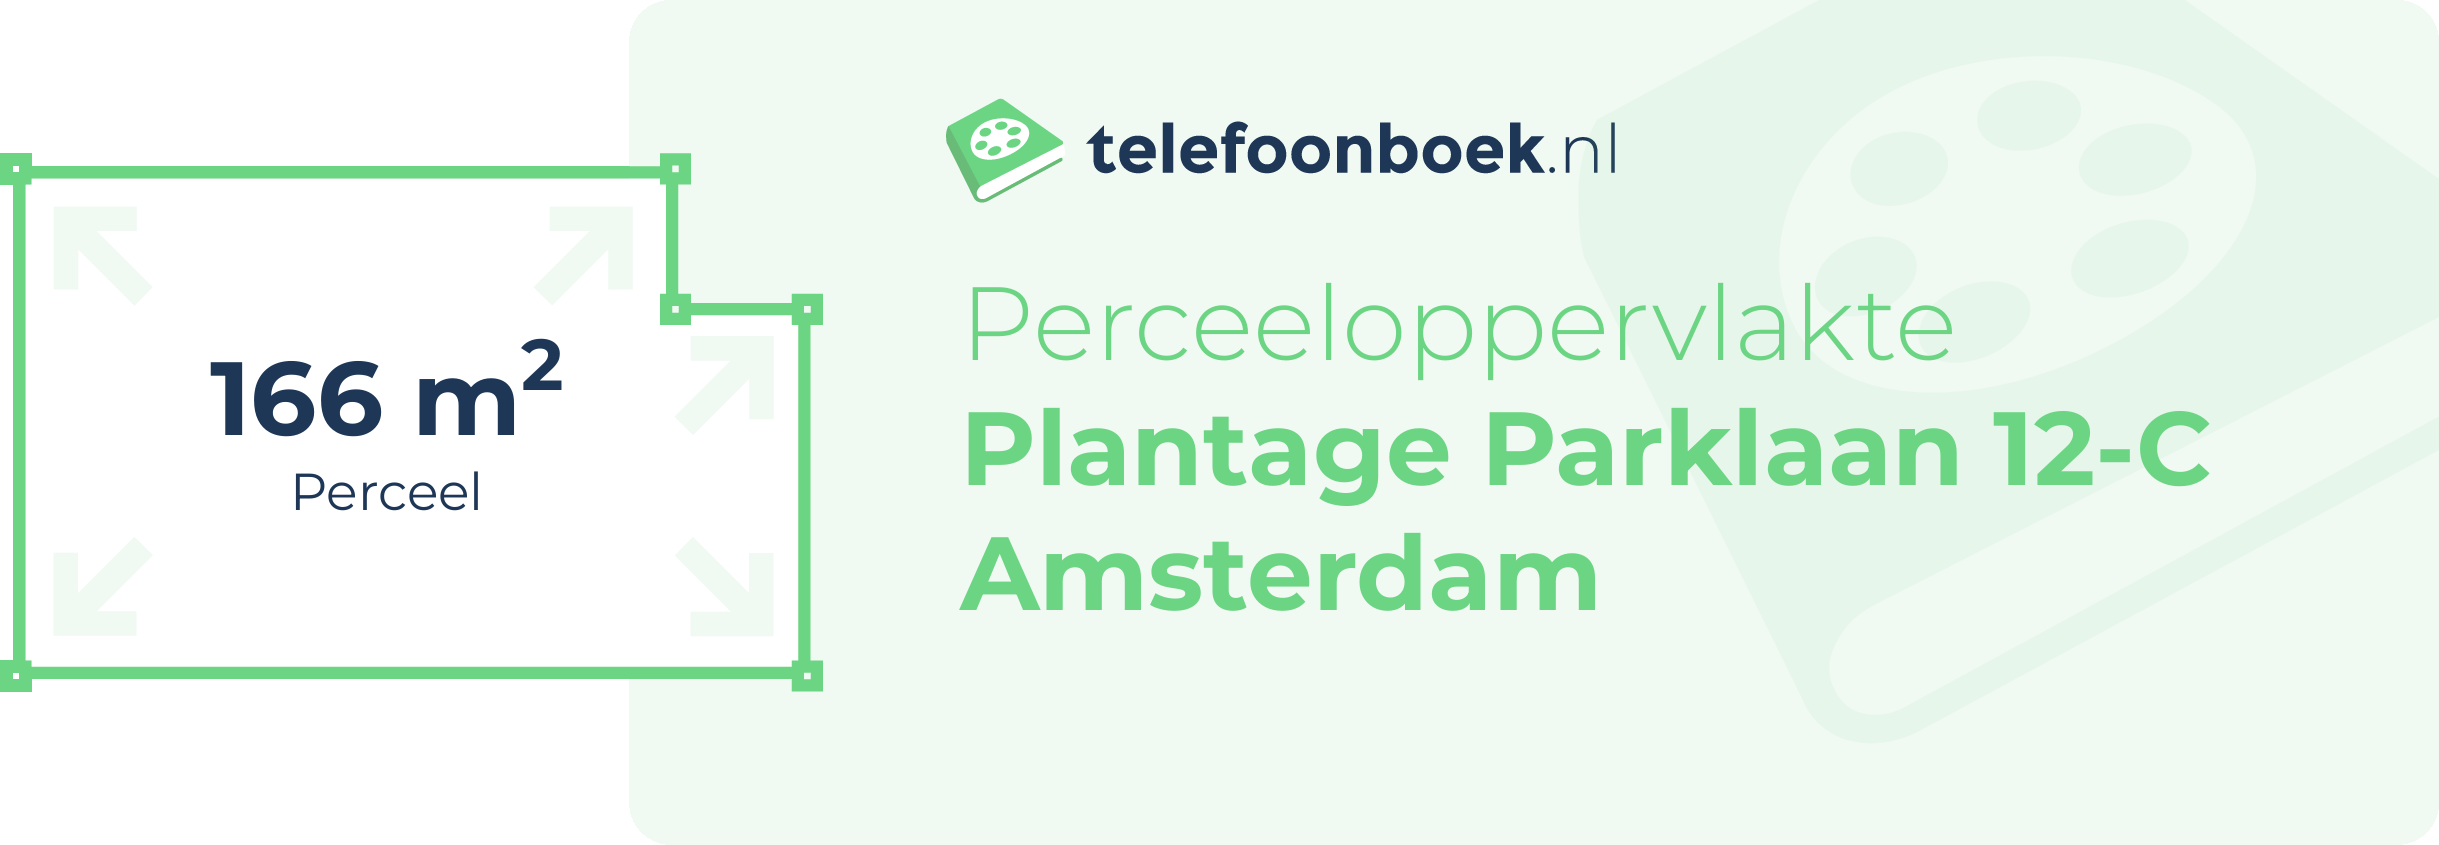 Perceeloppervlakte Plantage Parklaan 12-C Amsterdam